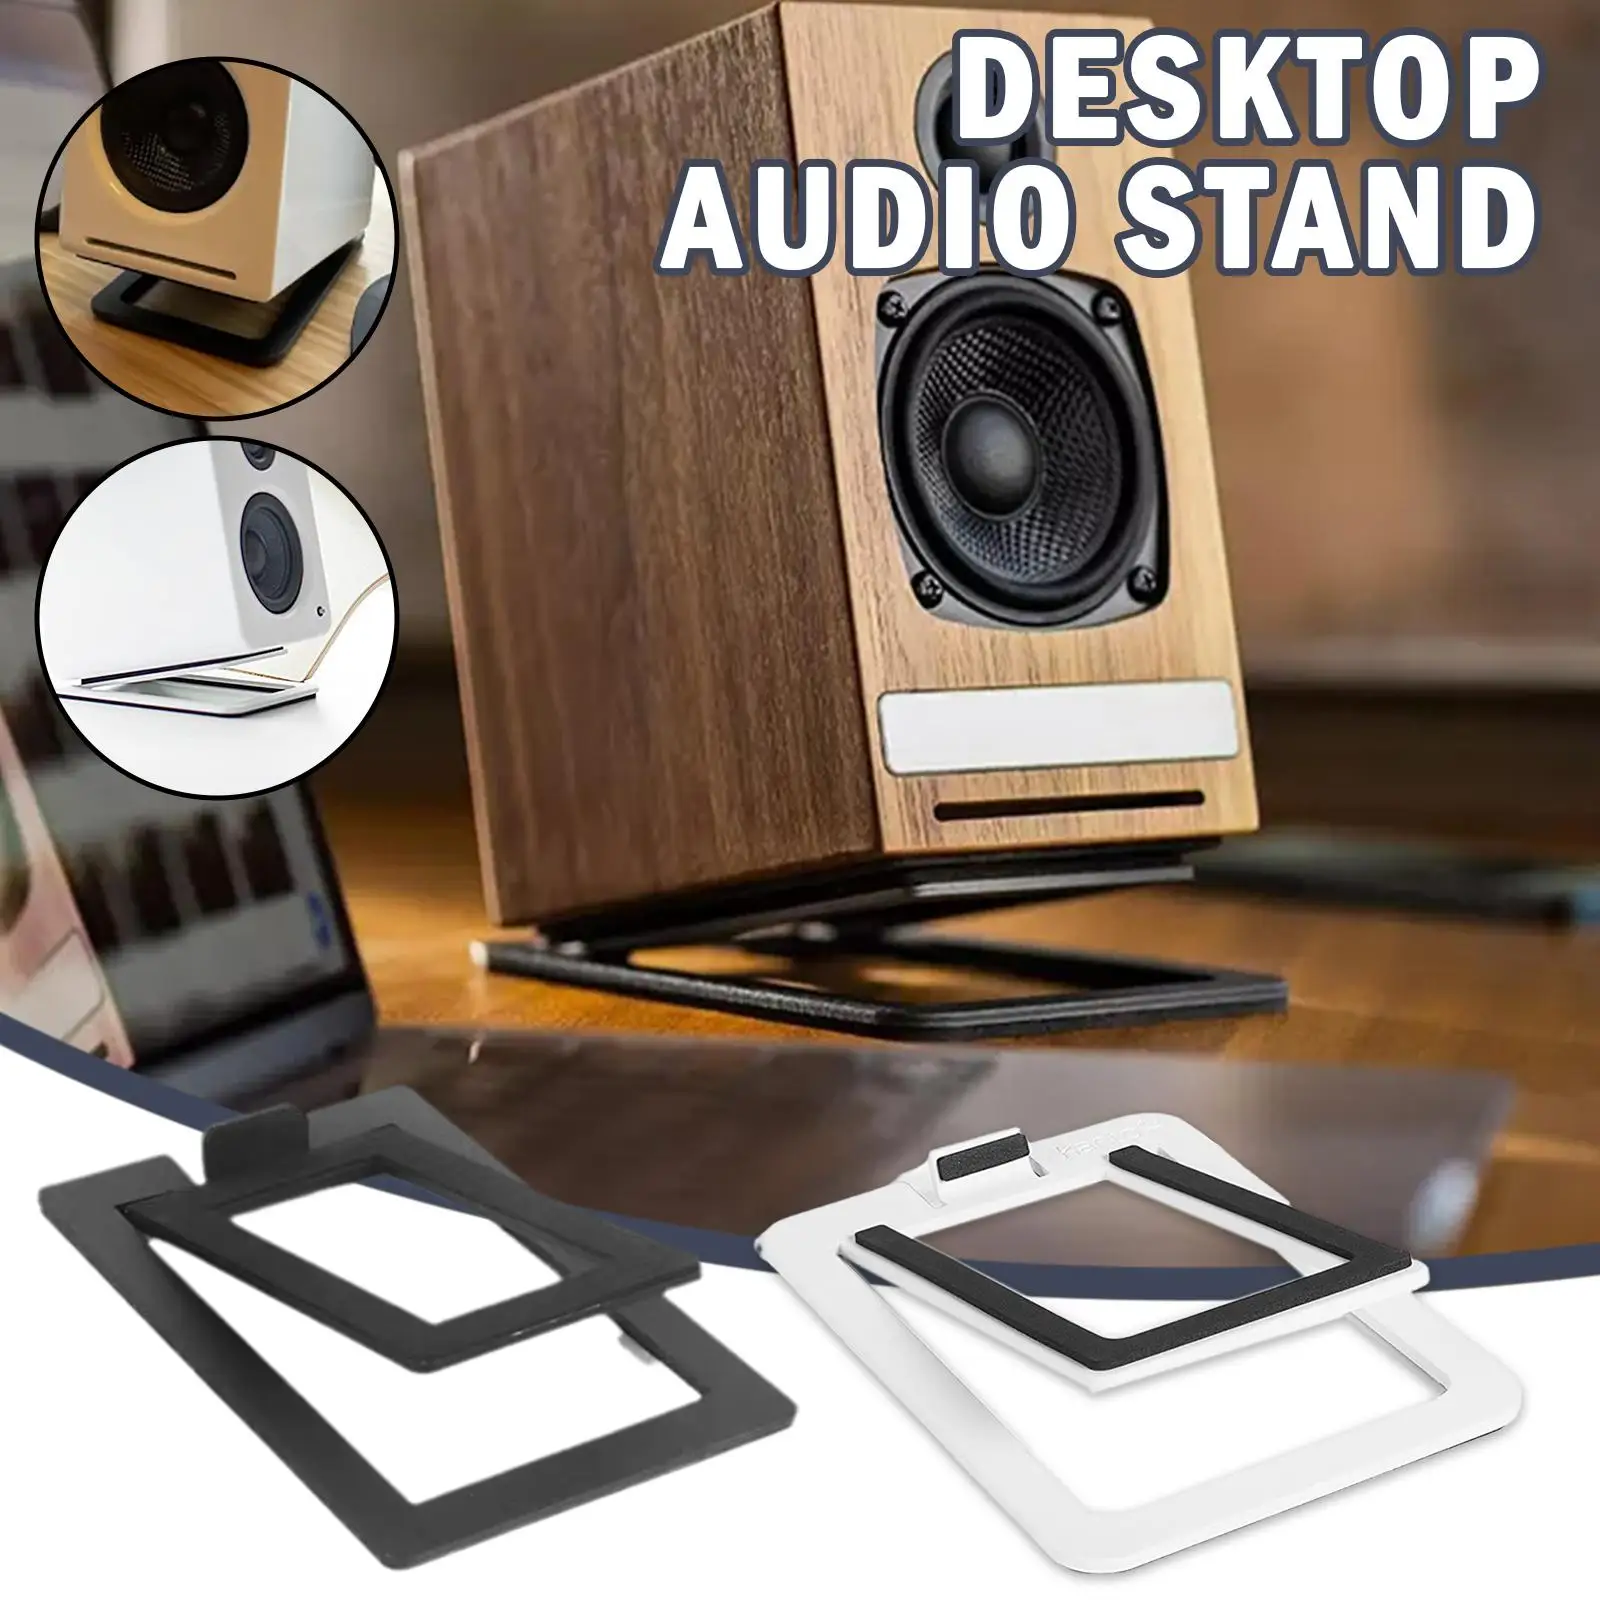 

1 Pc Desktop srsttstsgvvc sfffsa1 Pc Desktop Audio Speaker Stand Metal Bracket Universal Tabletop Holder for Kanto Tilt Sta D8W9